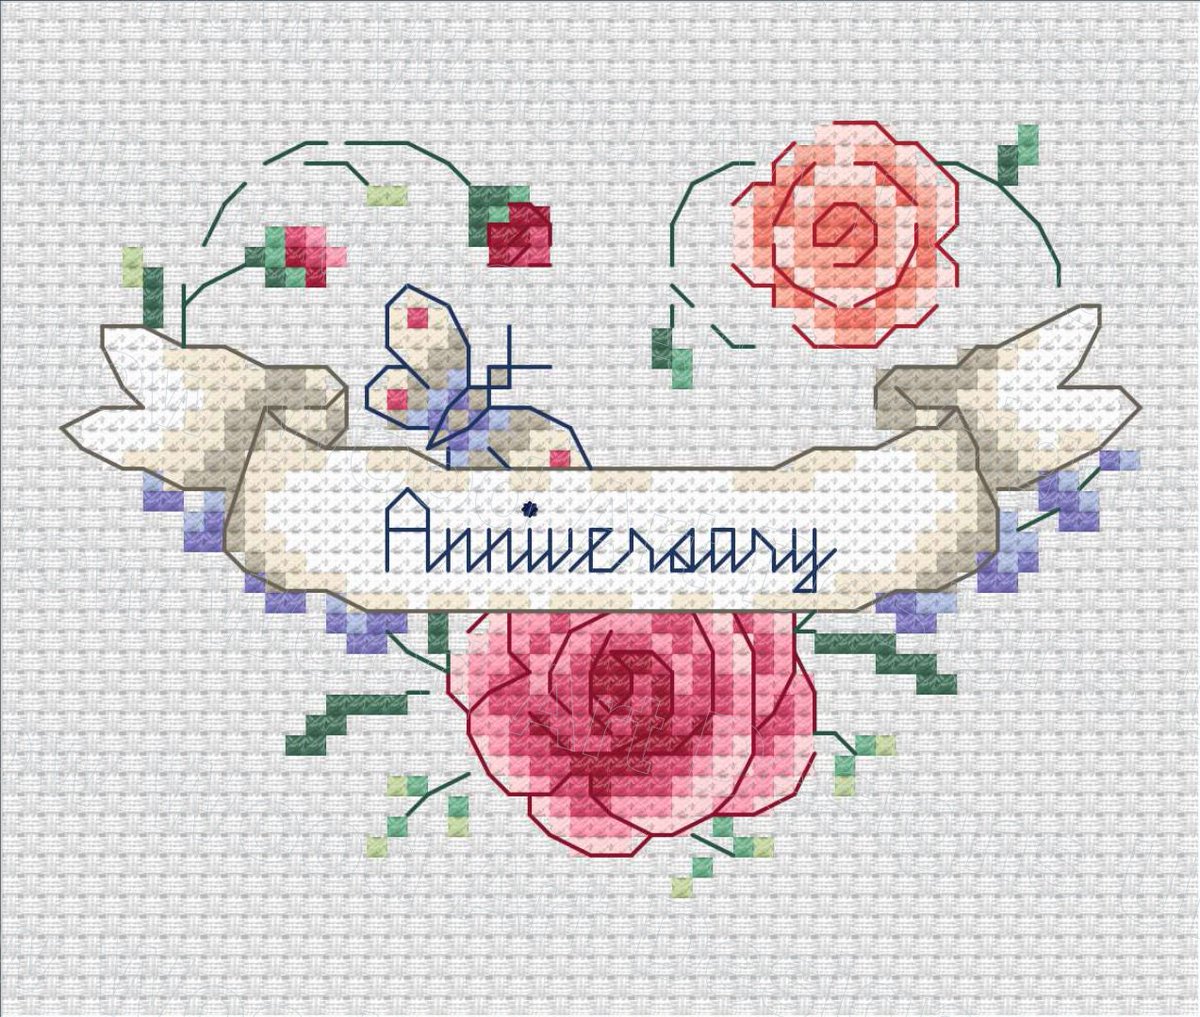 'Anniversary' Easy Cross Stitch Design, DMC, 20 Threads, PDF Digital Download etsy.me/3guBuES #anniversary #bedroom #wall #homedecor #digitalcrossstitch #flowercrossstitch #heartcrossstitch #butterfly #flowers #crossstitch #Crossstitcher